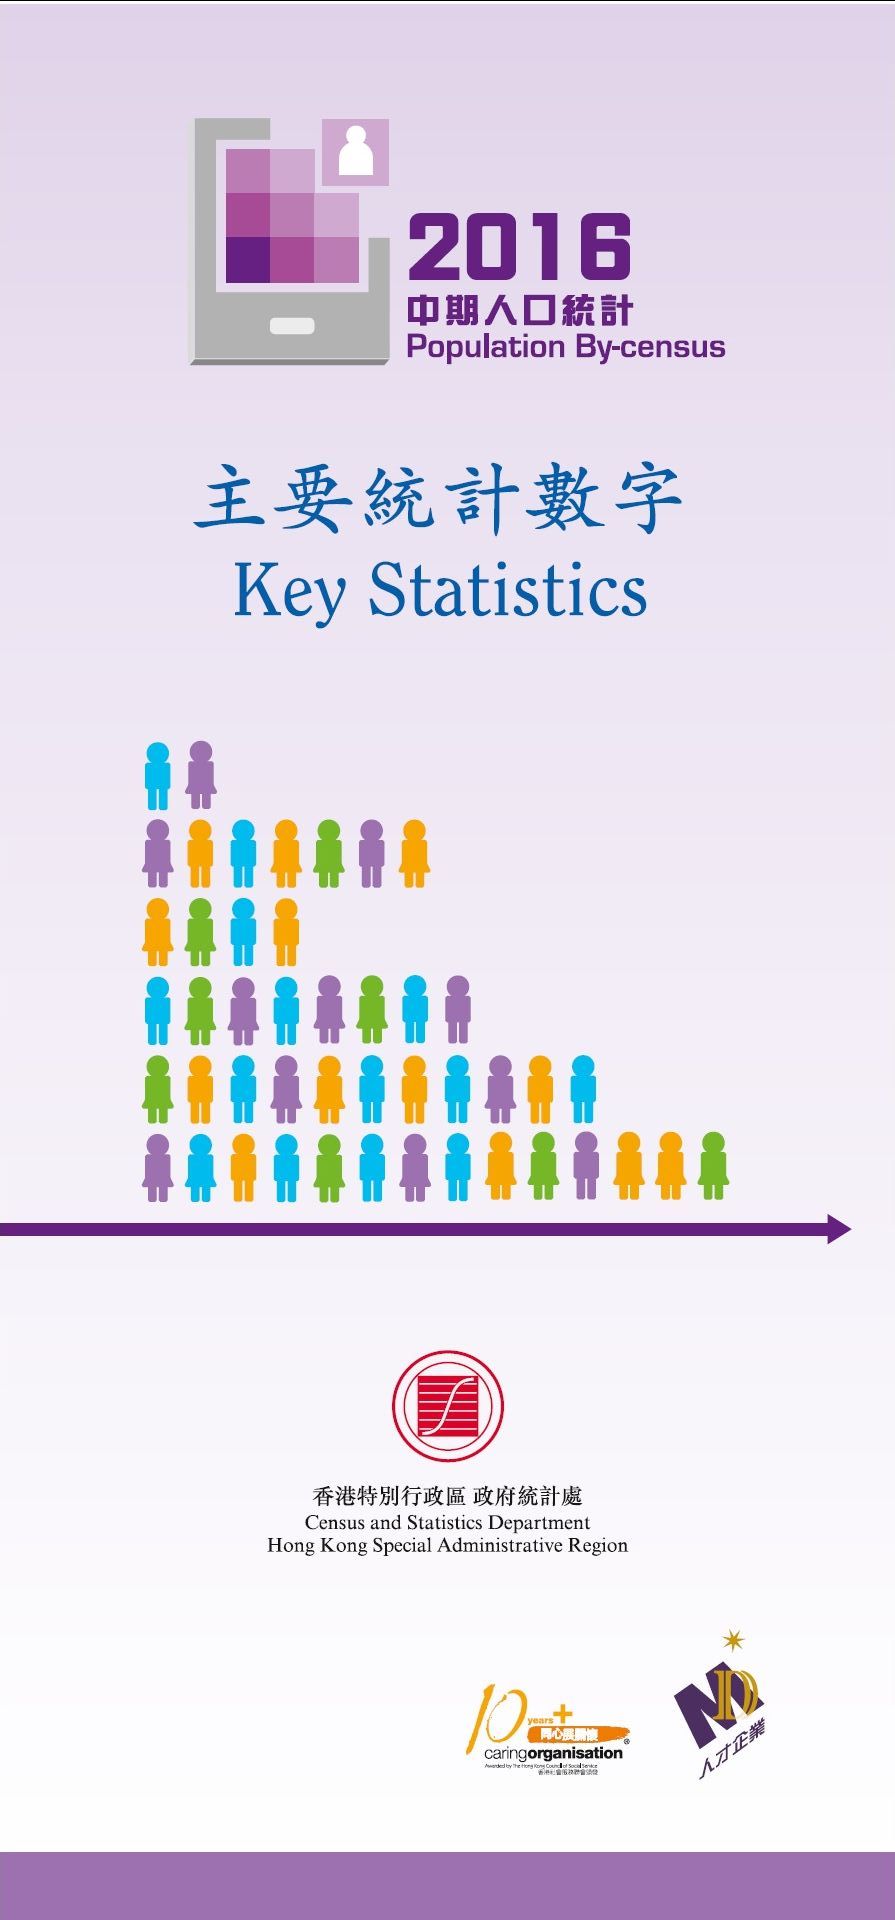 2016 Population By-census – Key Statistics